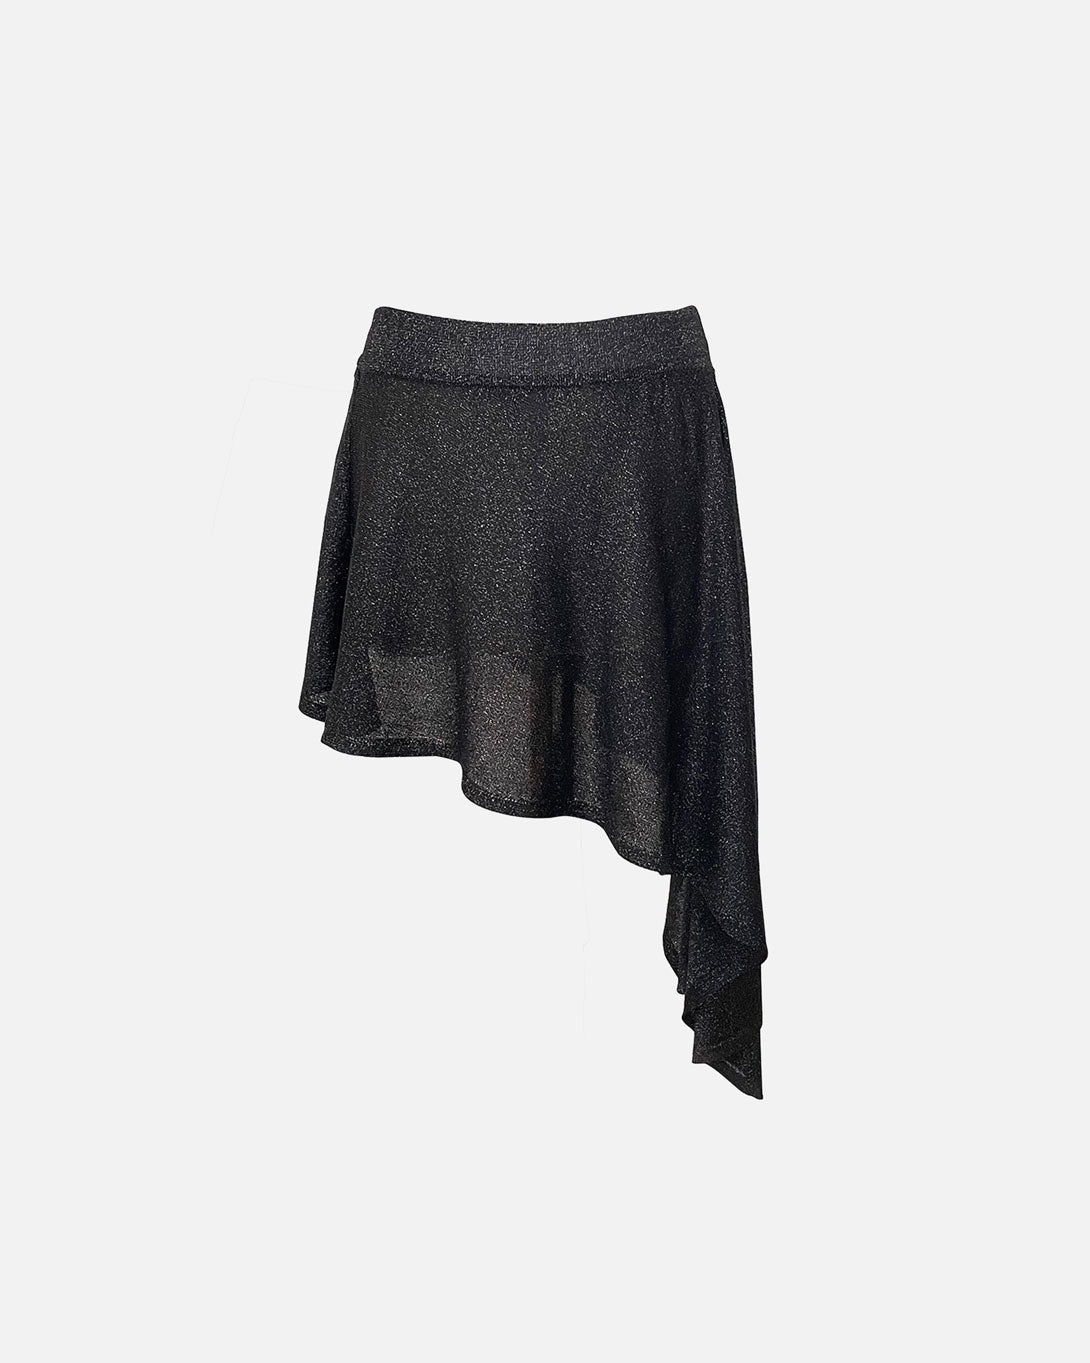 Black Knitwear Geometric Skirt - Dresses & Skirts - Pepa Salazar - Elevastor